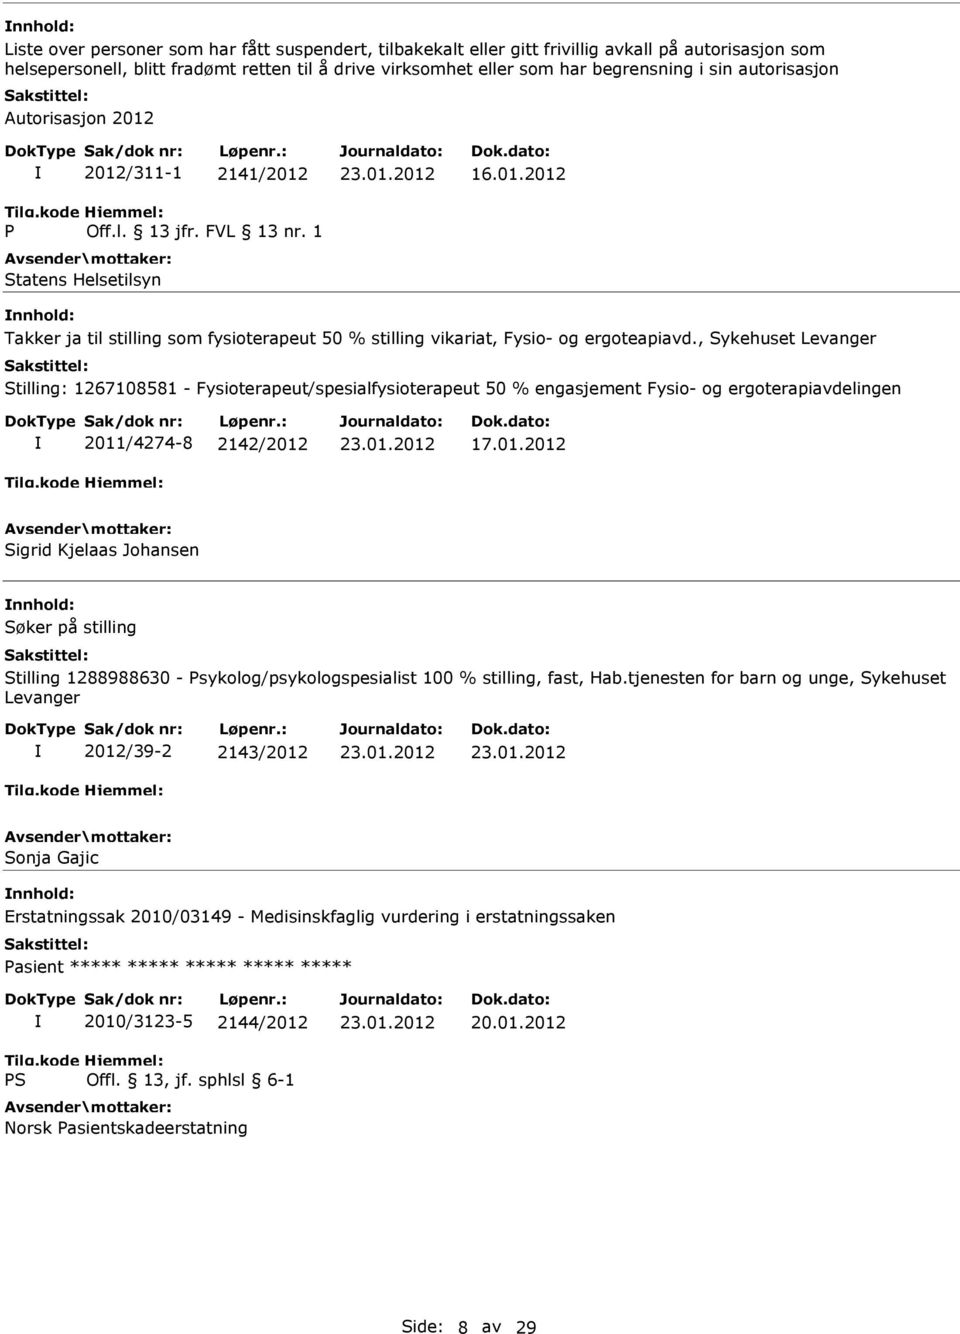 , Sykehuset Levanger Stilling: 1267108581 - Fysioterapeut/spesialfysioterapeut 50 % engasjement Fysio- og ergoterapiavdelingen 2011